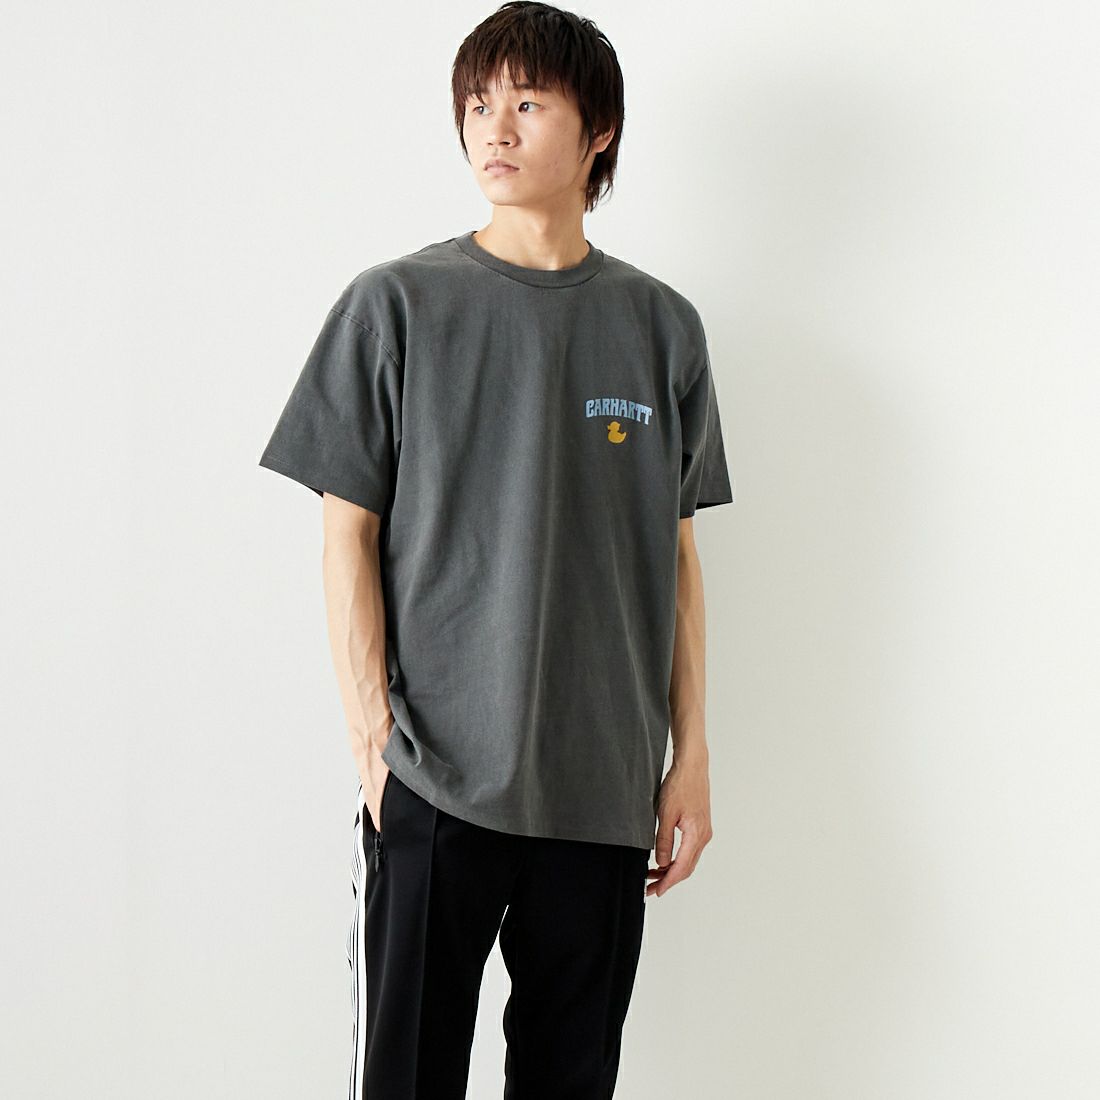 carhartt WIP [カーハートダブリューアイピー] ショートスリーブ ダッキンTシャツ [I033171] BLACK